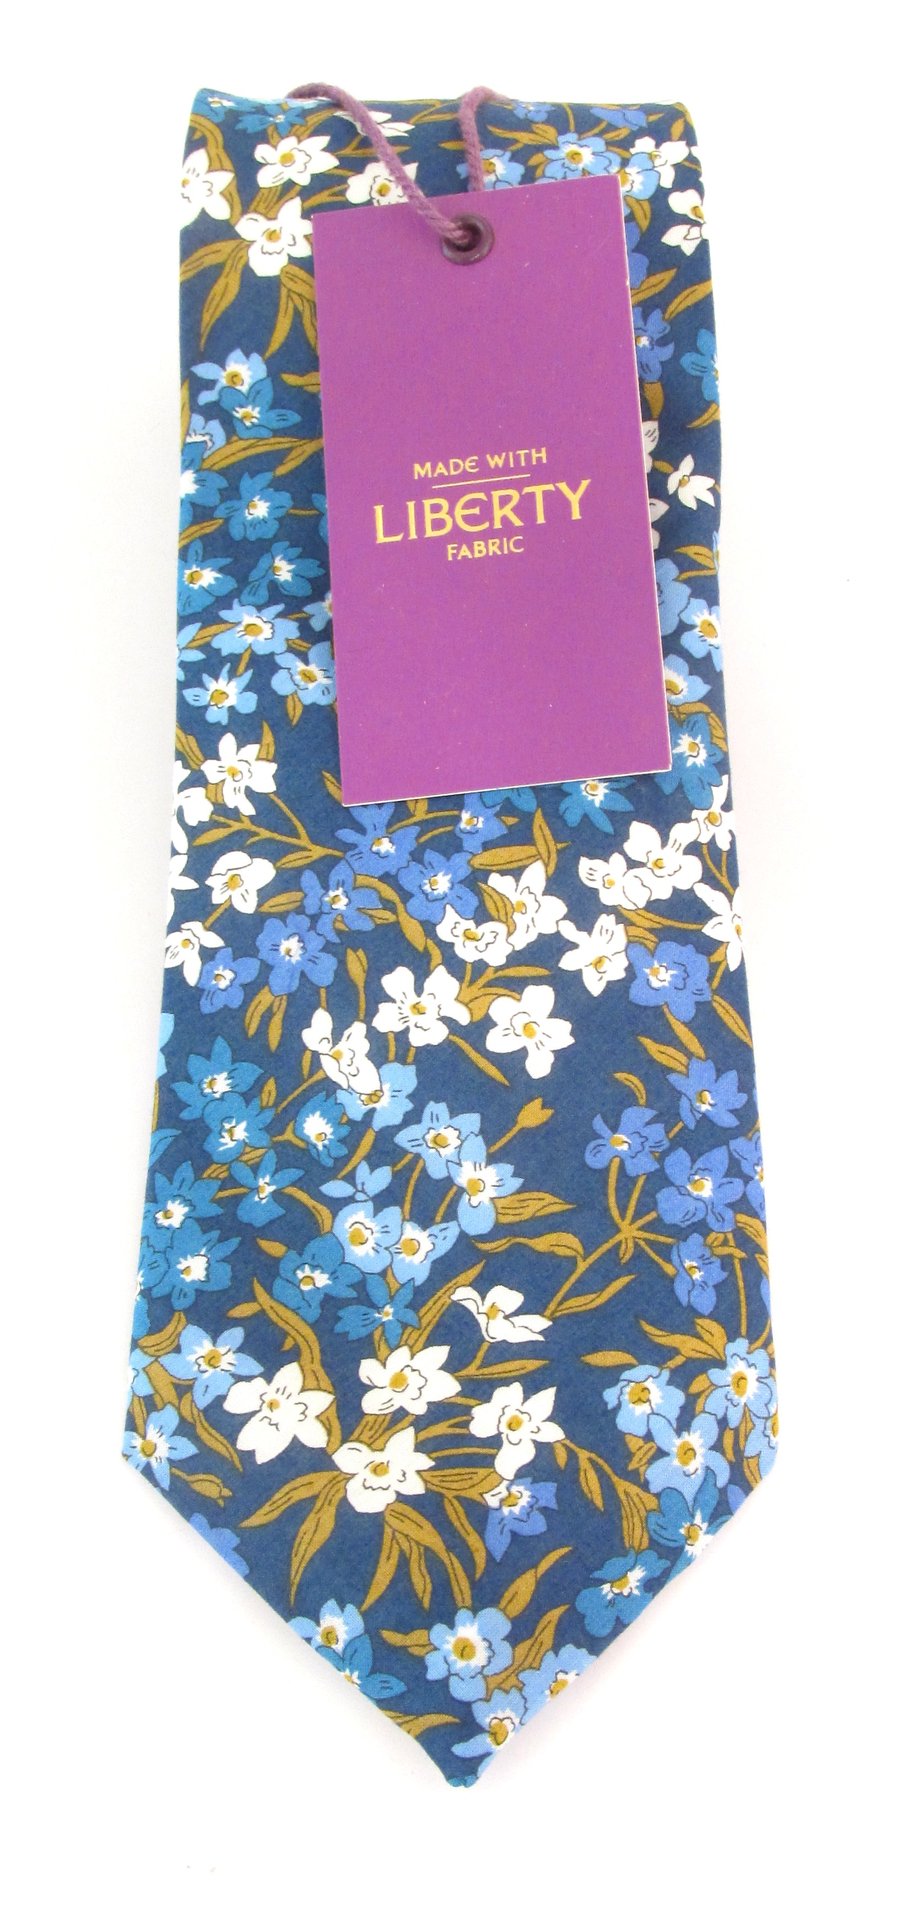 Sea Blossom Blue Liberty tie by Van Buck